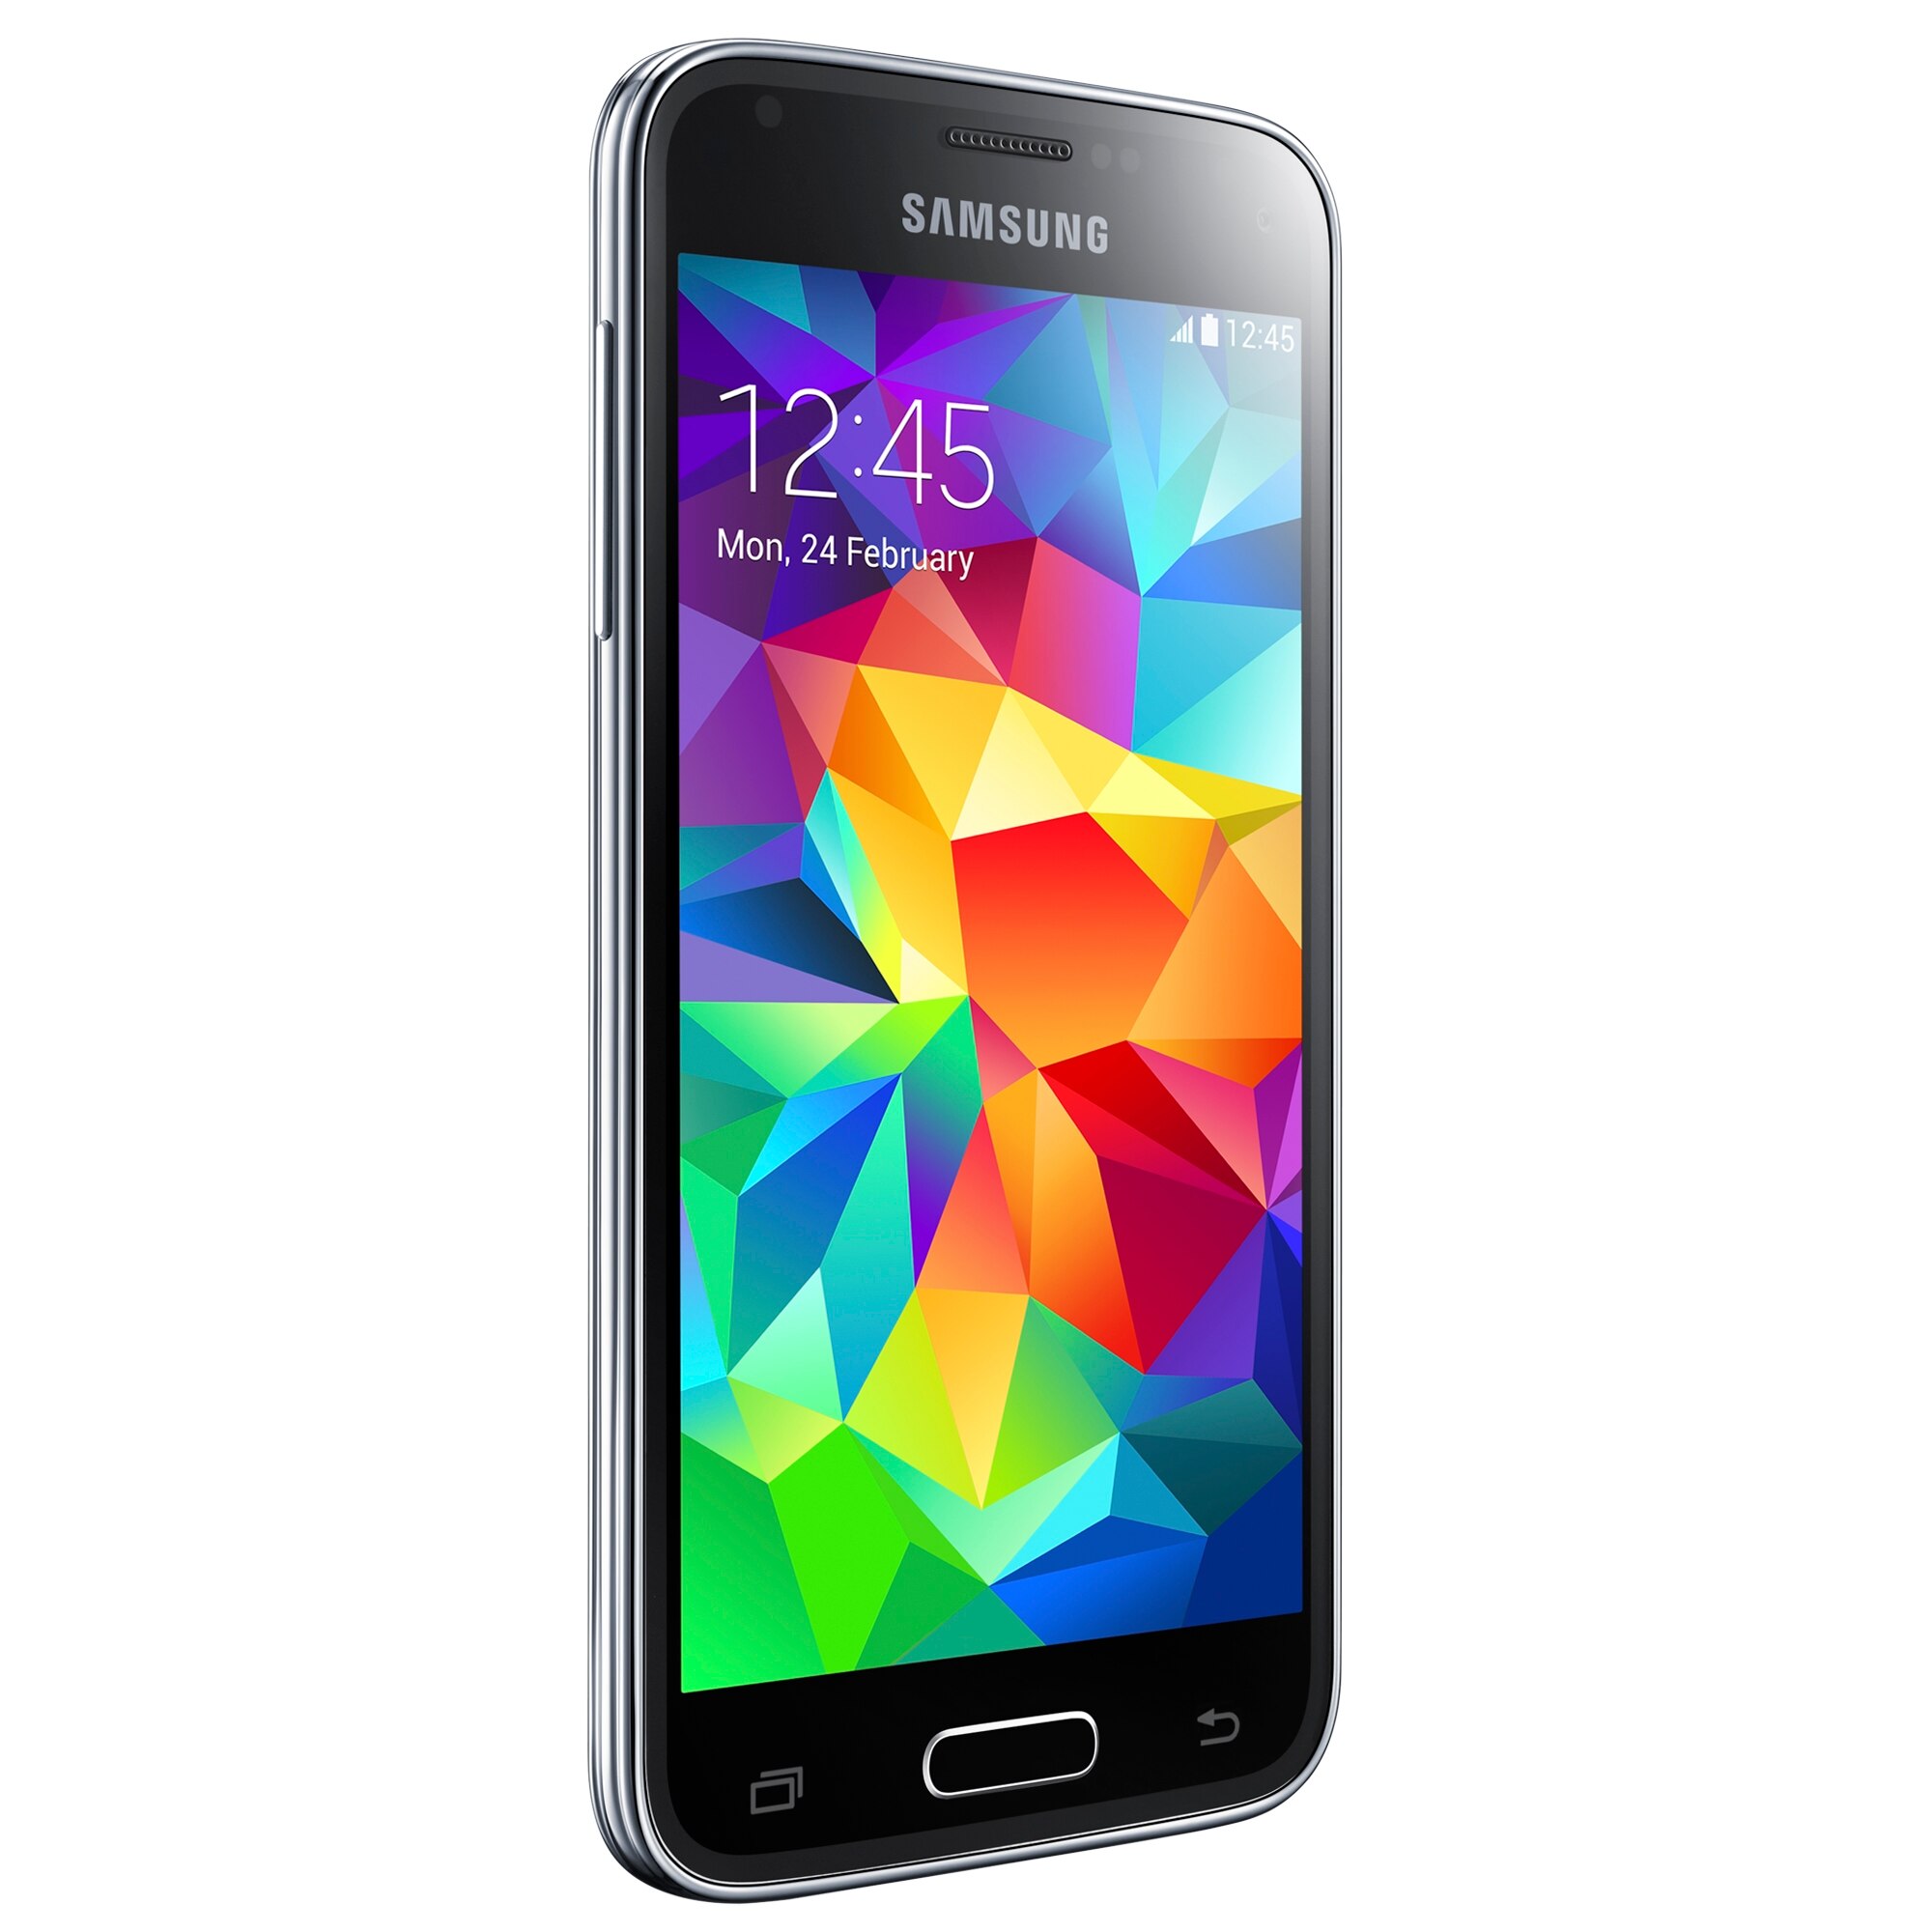 Samsung Galaxy S5 Mini